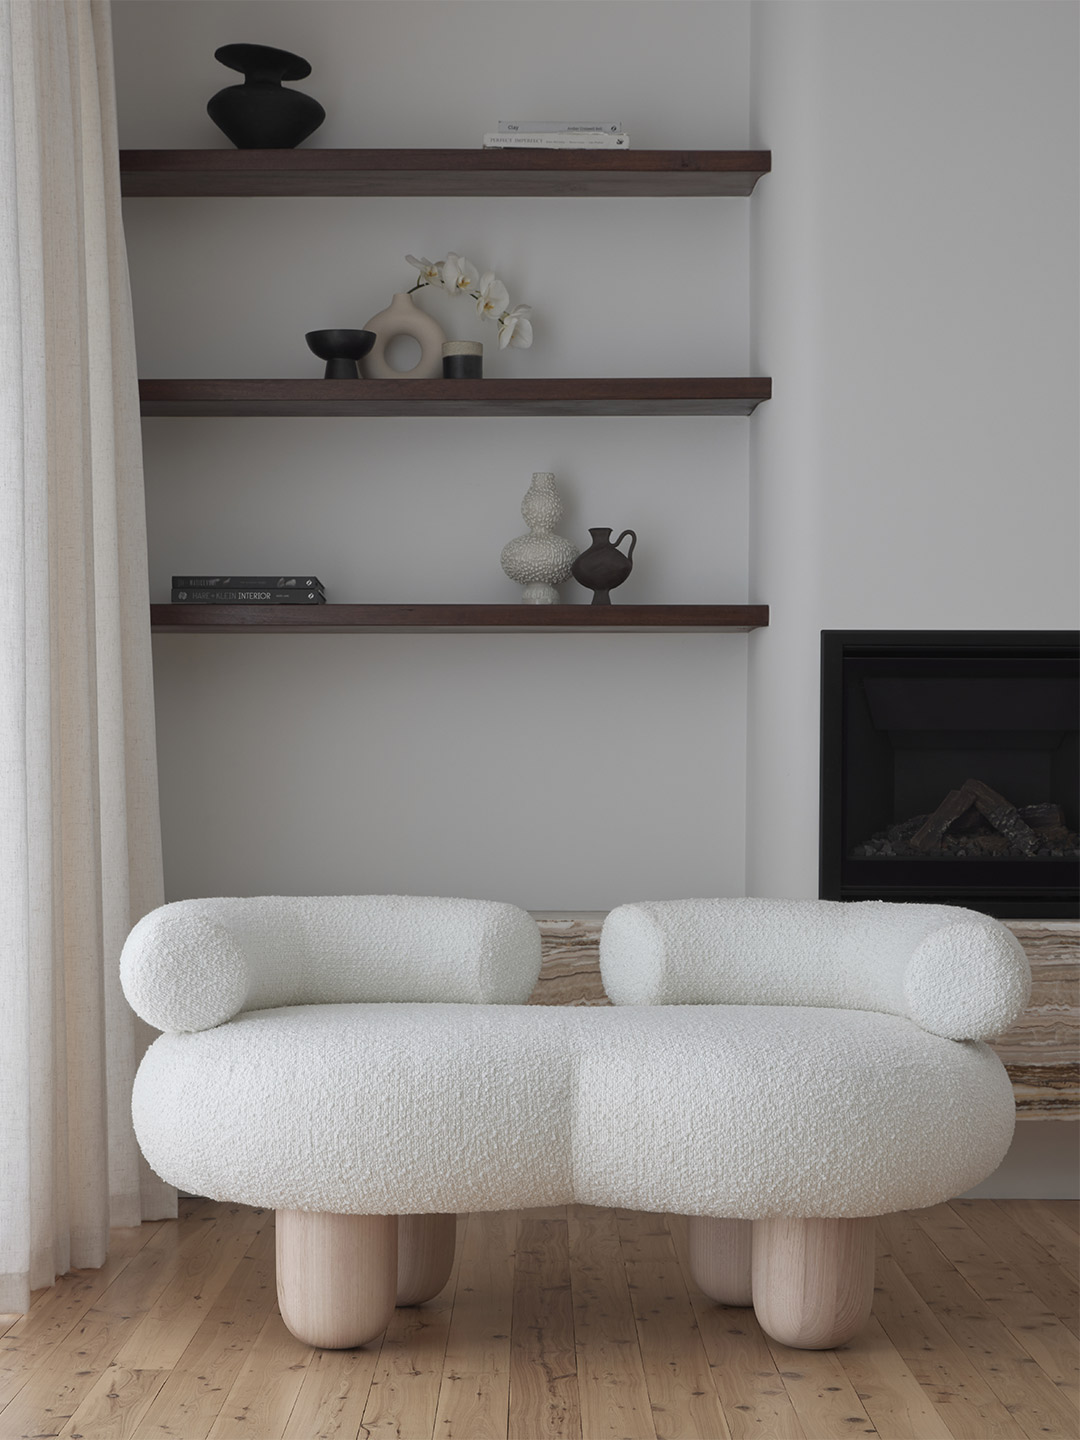 Hegi Design House collaborates with Pietro Franceschini on "playful" furniture ranges